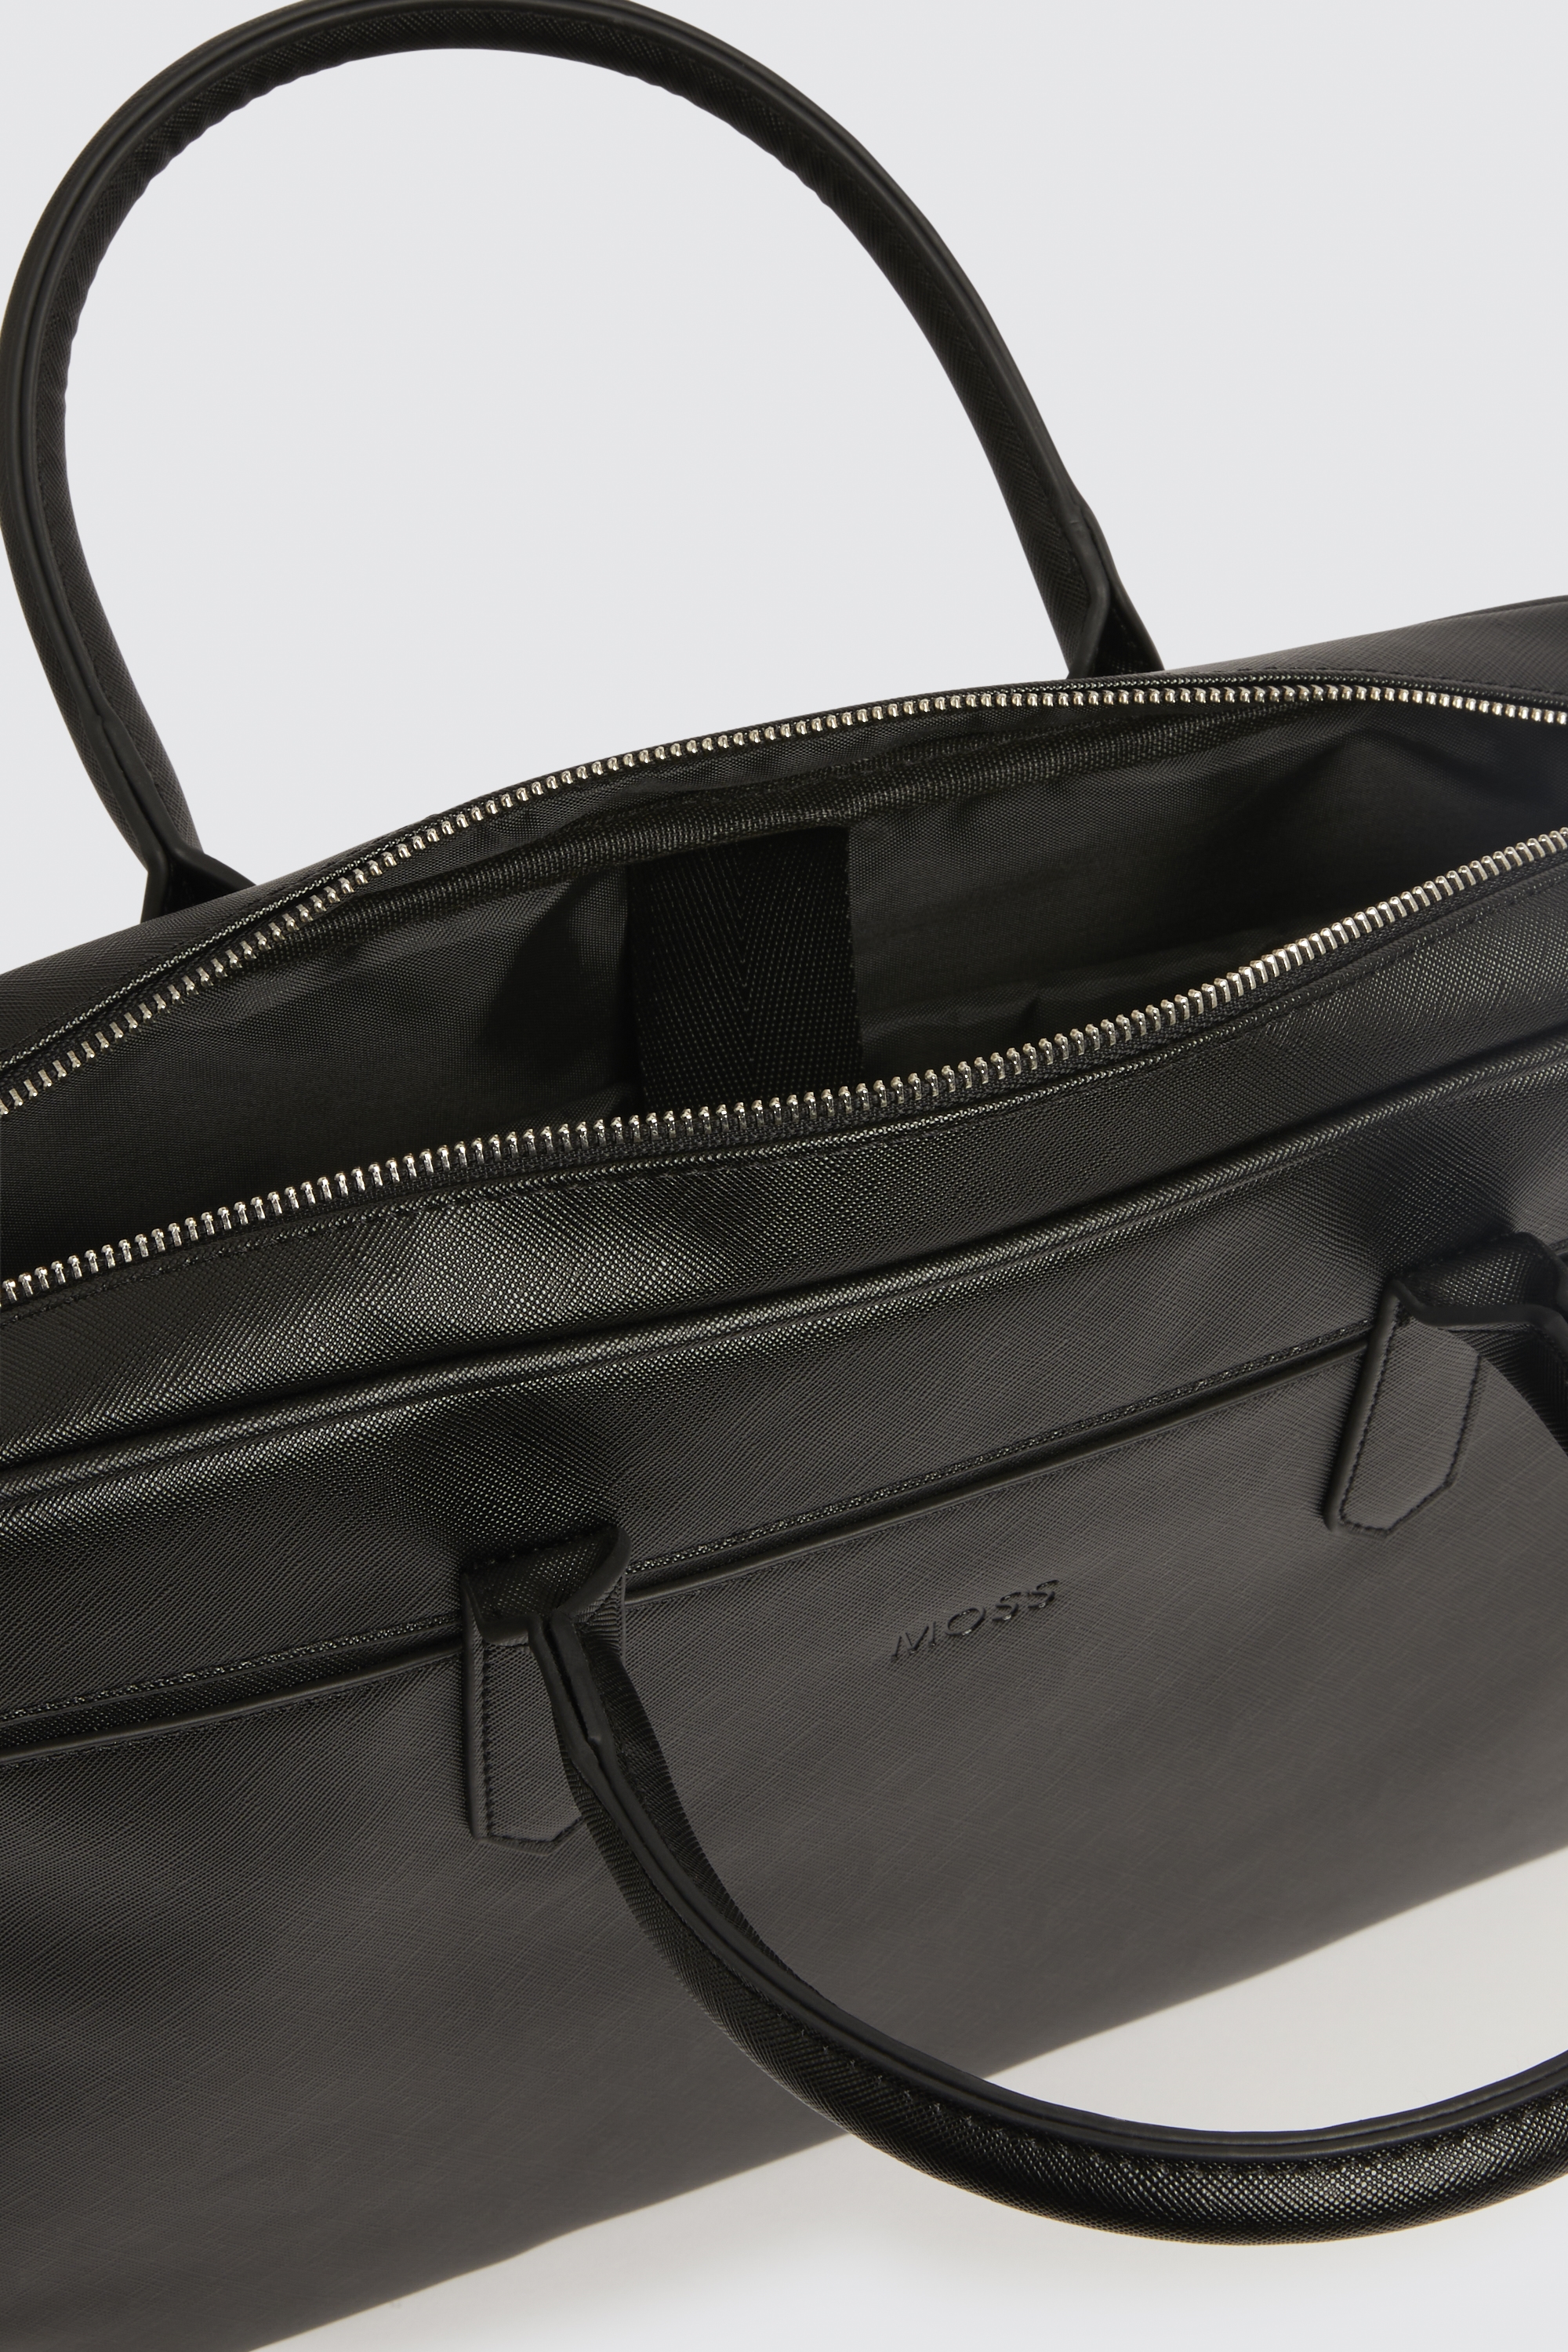 Moss Black Saffiano Attache Bag | Buy Online at Moss